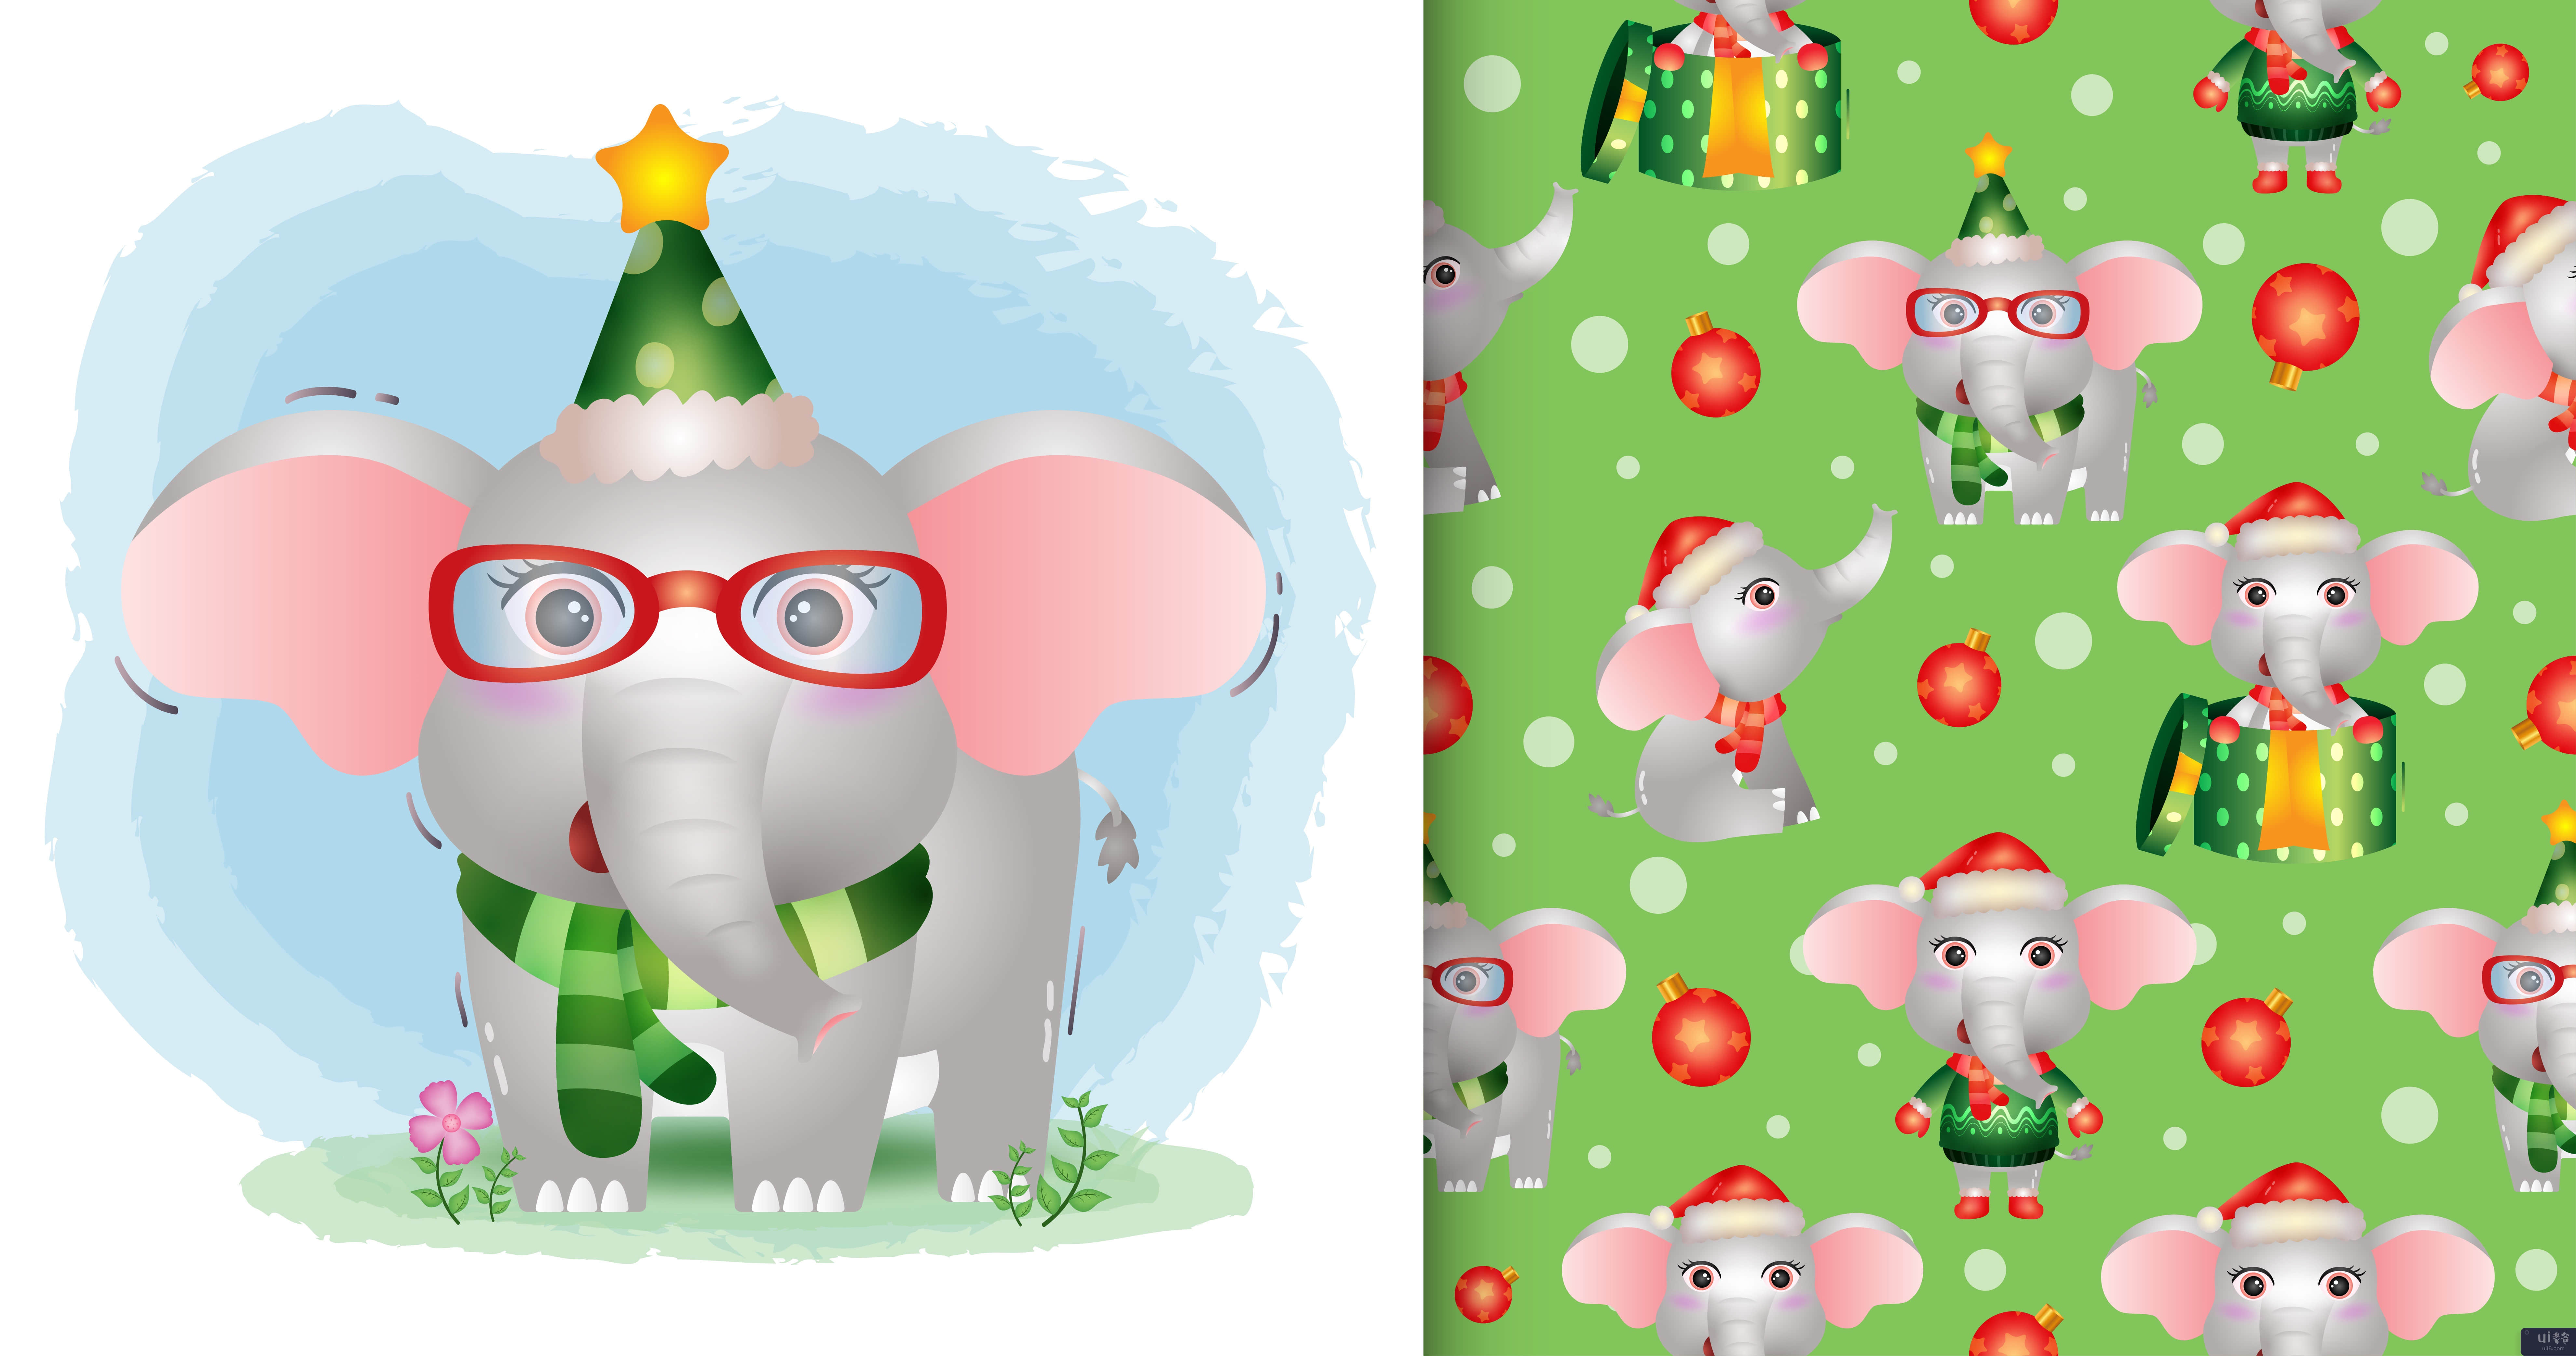 可爱的大象圣诞人物。无缝图案和插图设计(a cute elephant christmas characters. seamless pattern and illustration designs)插图2